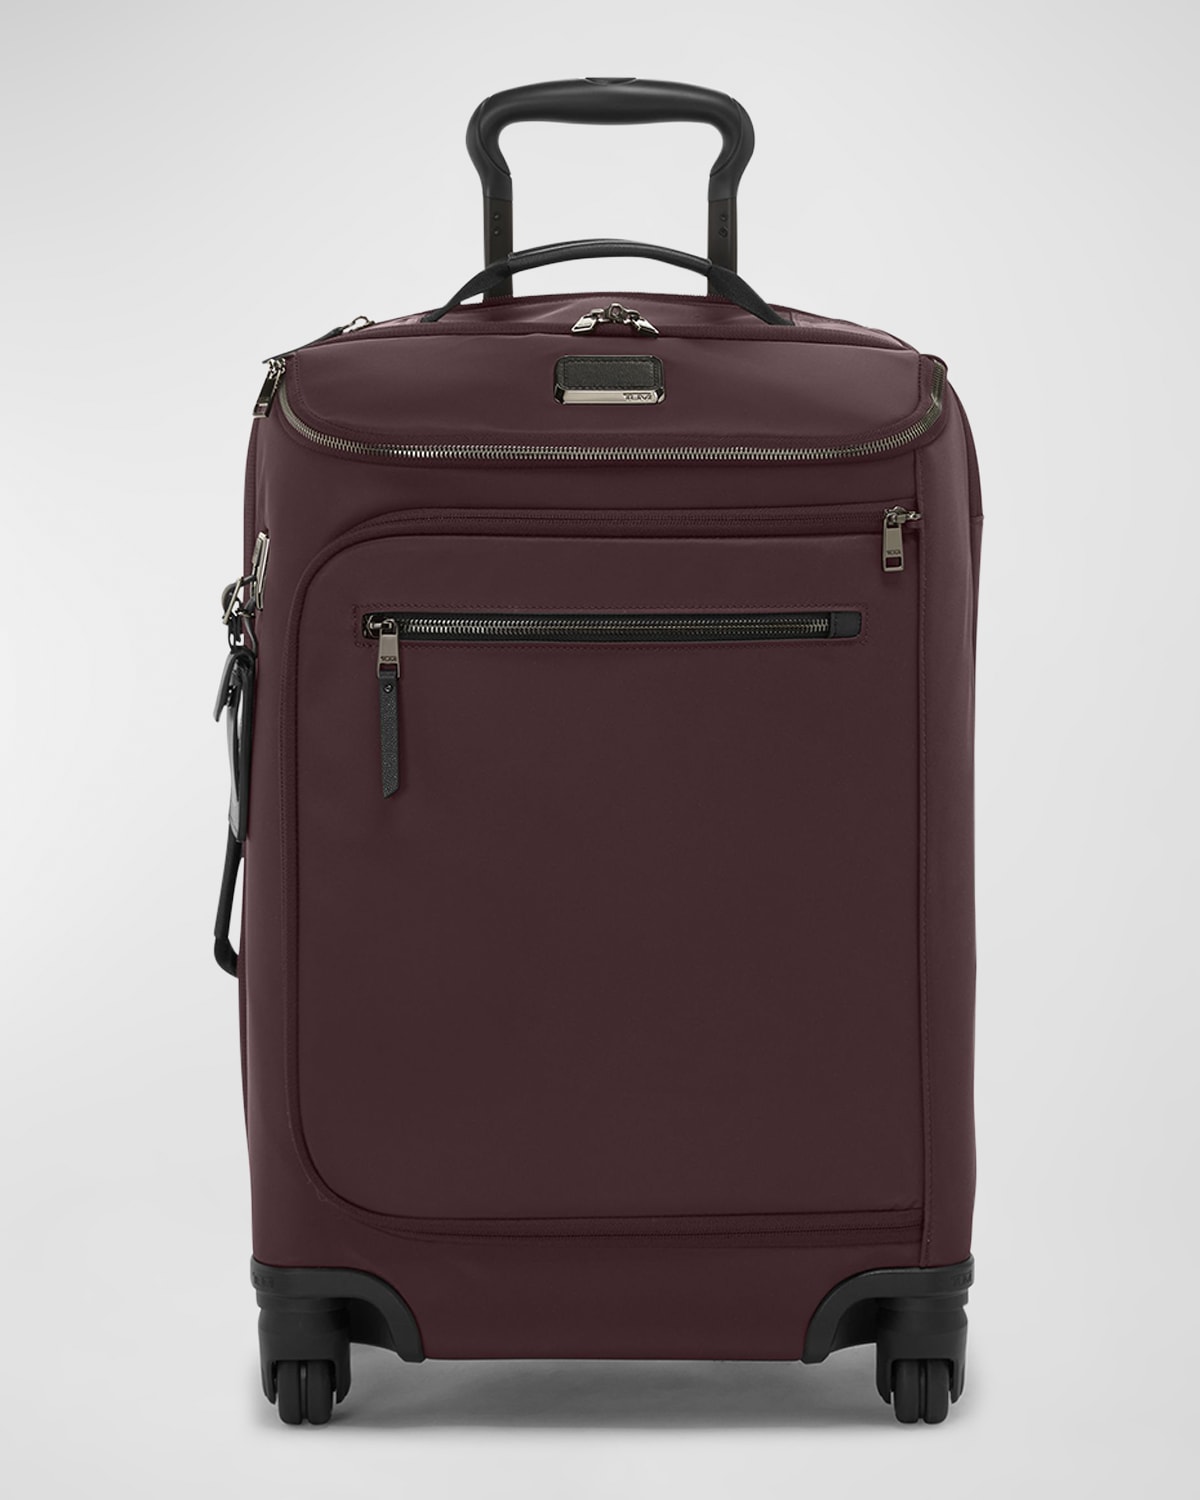 Tumi Leger International Carry-on Luggage In Deep Plum